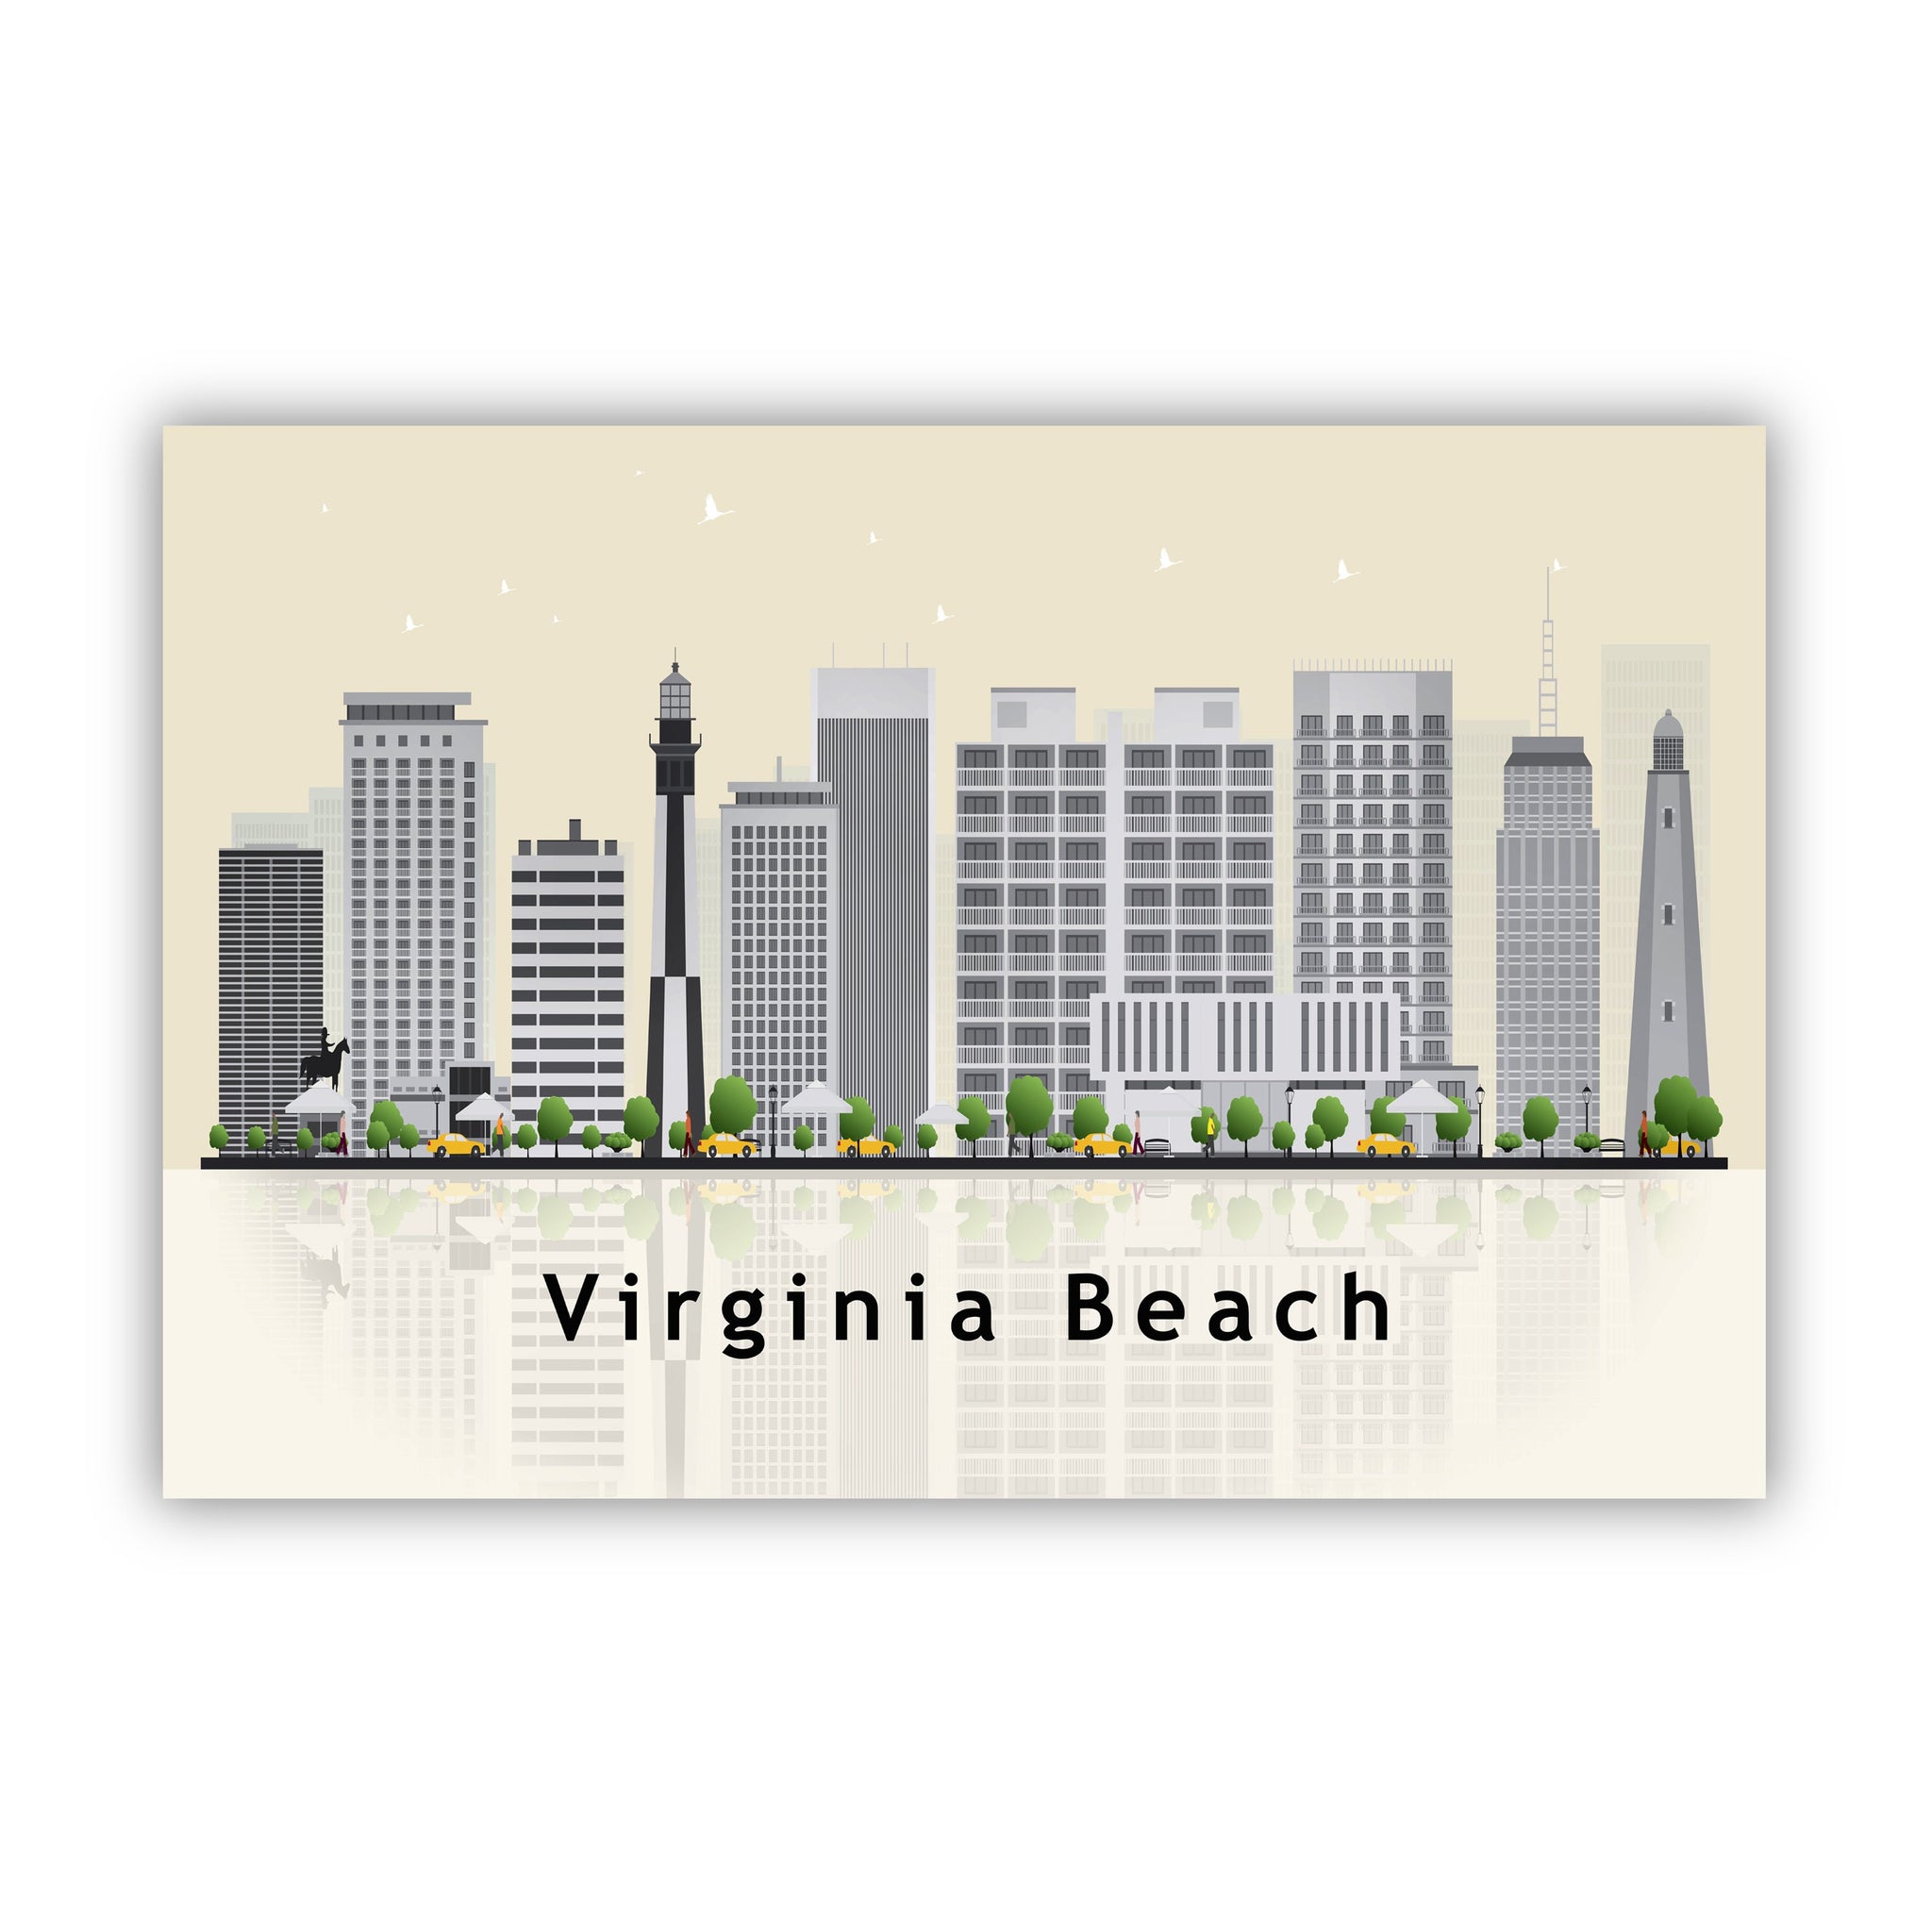 VIRGINIA BEACH Illustration skyline poster, Virginia state modern skyline cityscape poster print, Landmark map poster, Home wall art